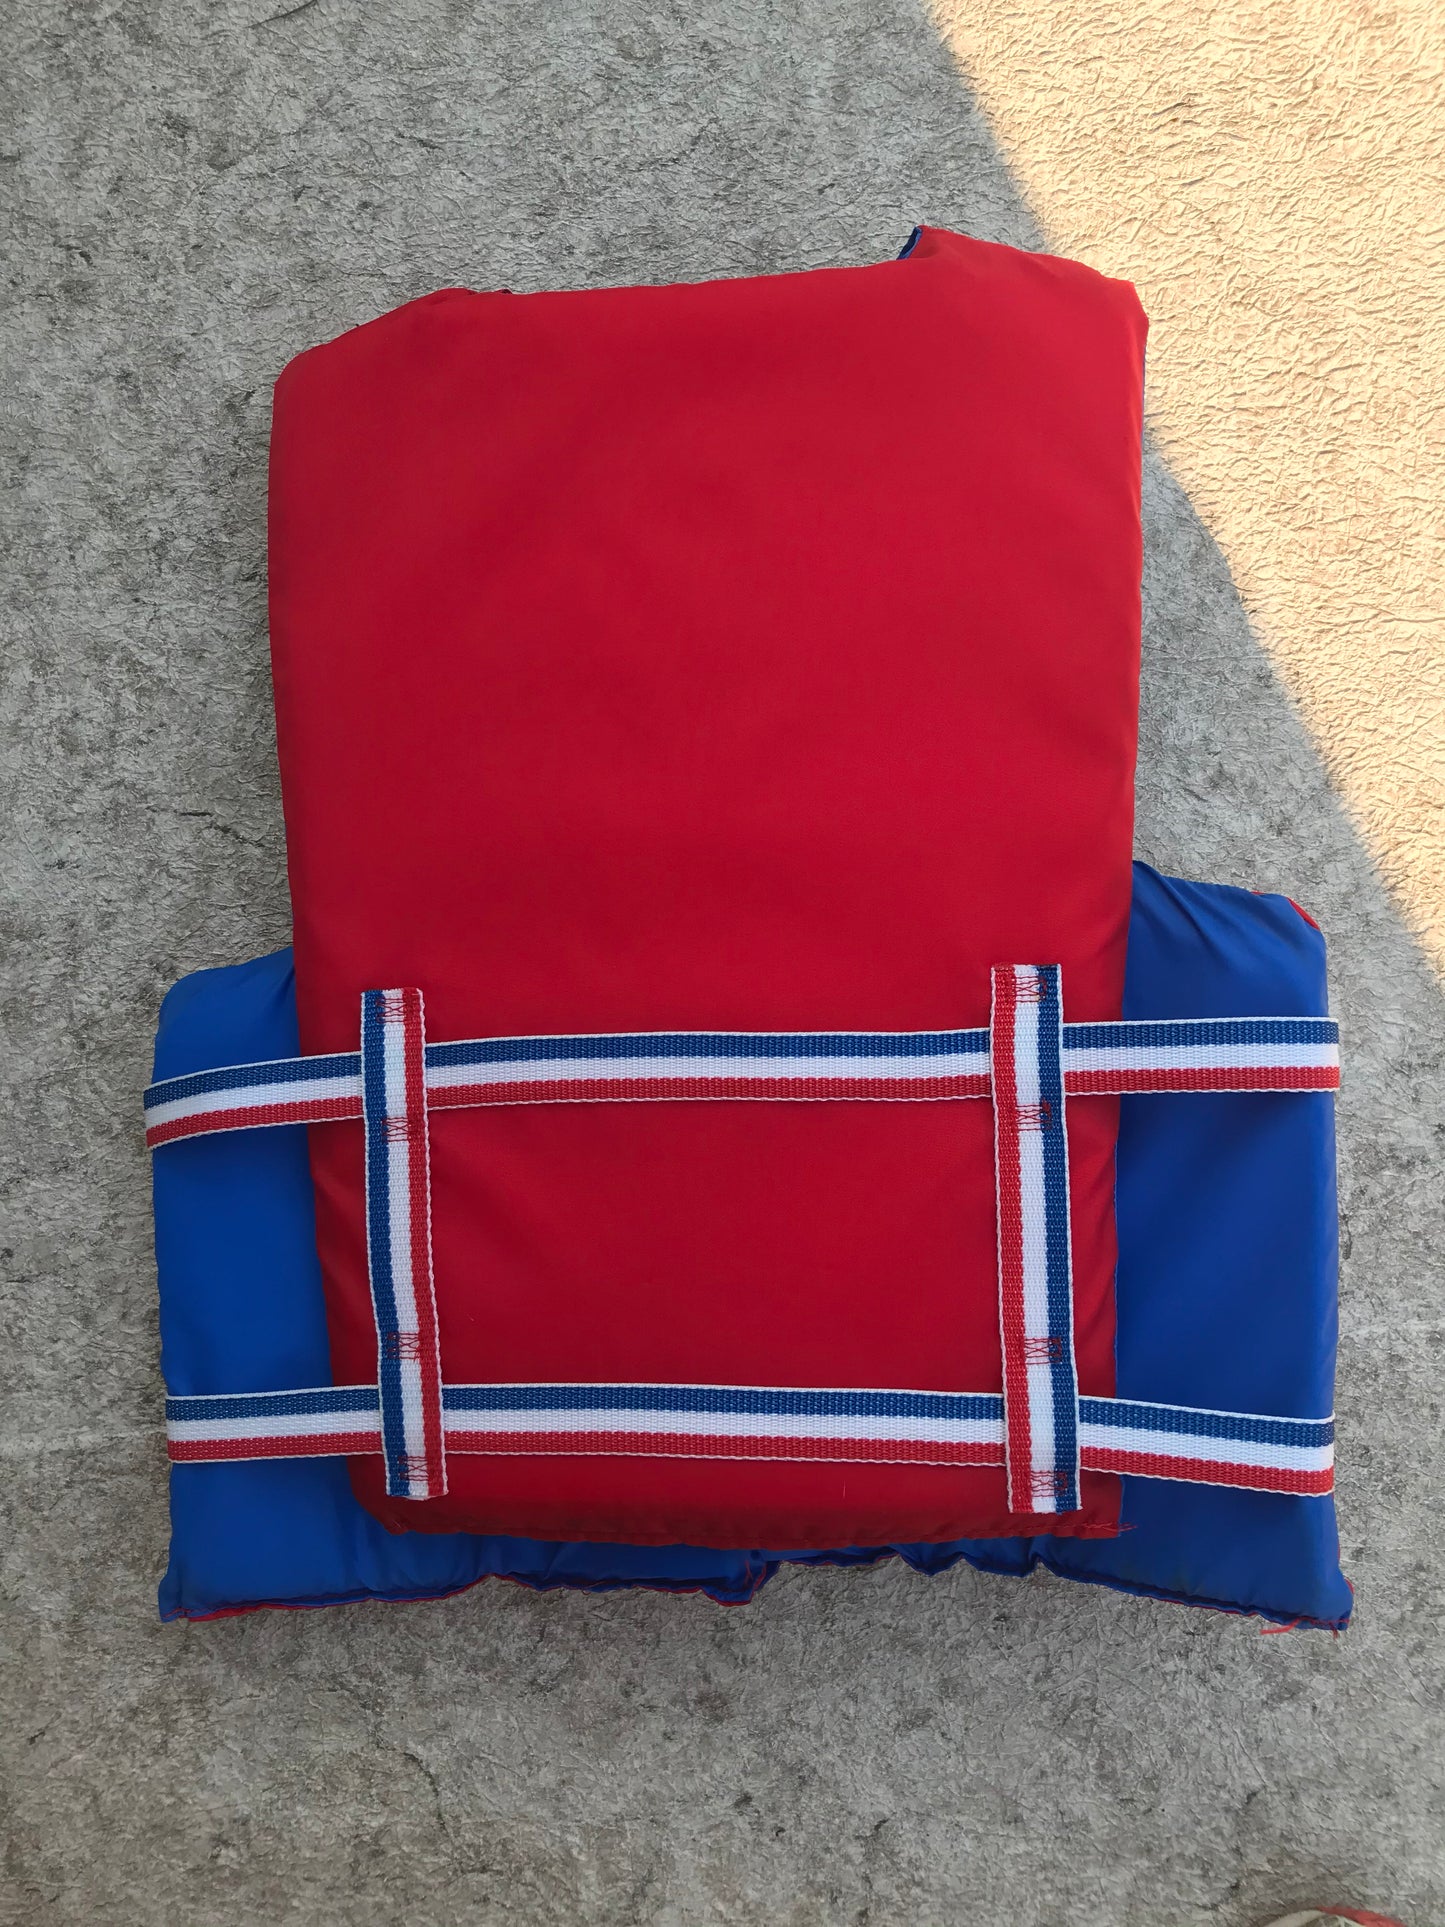 Life Jacket Adult Size 90-200 Lb Universal Adjustable Red Blue Minor Marks